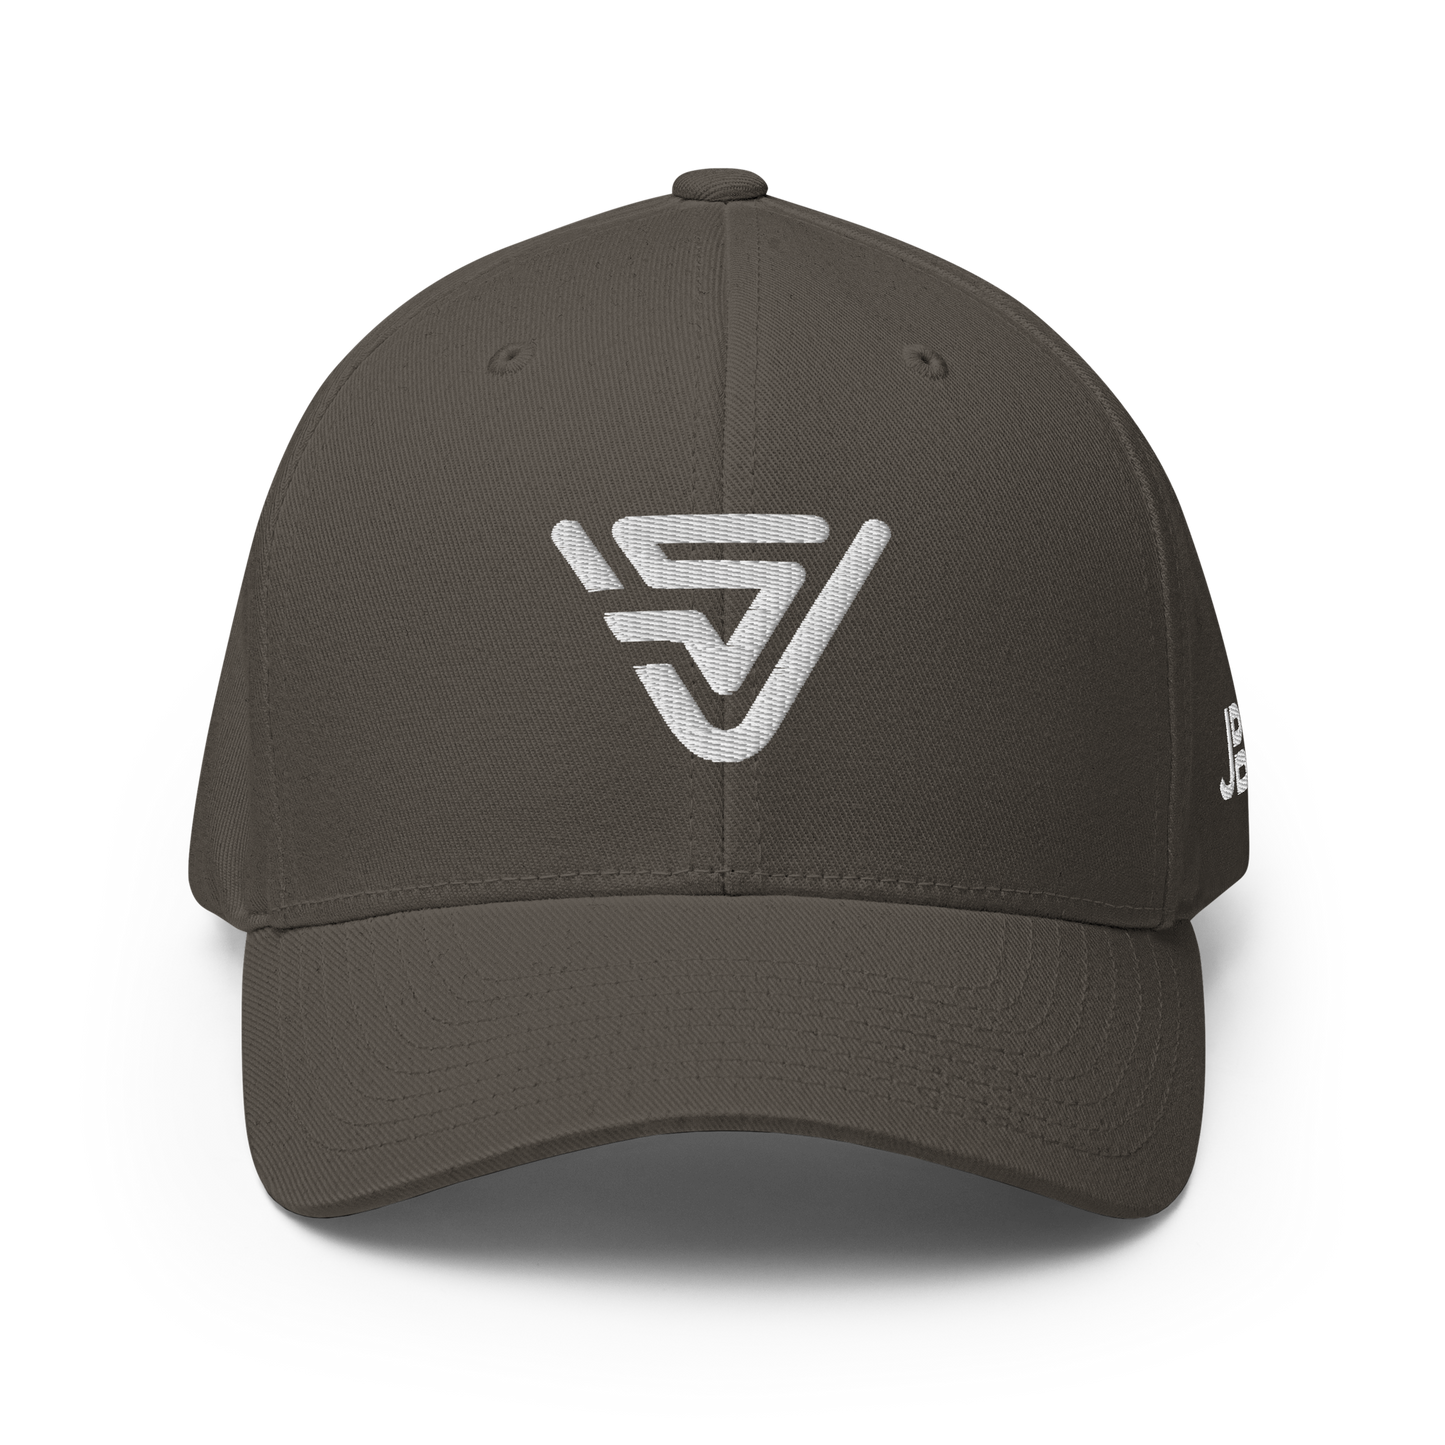 VIRTUAL STEEL - Flexfit Cap